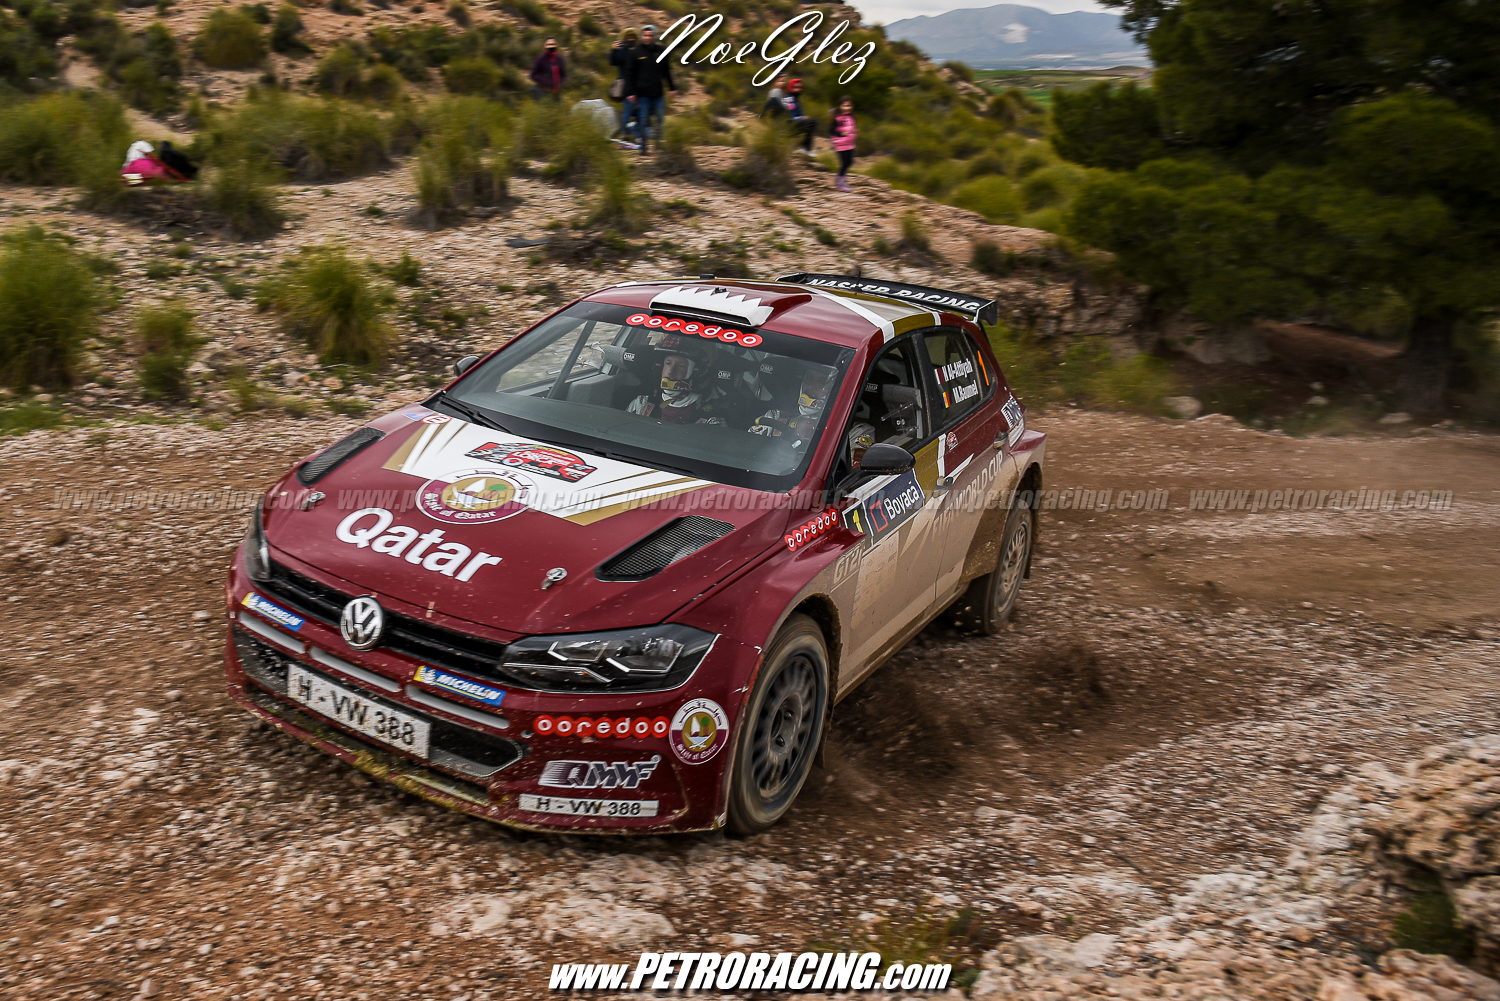 X Rallye Tierra Lorca - NoeGlez